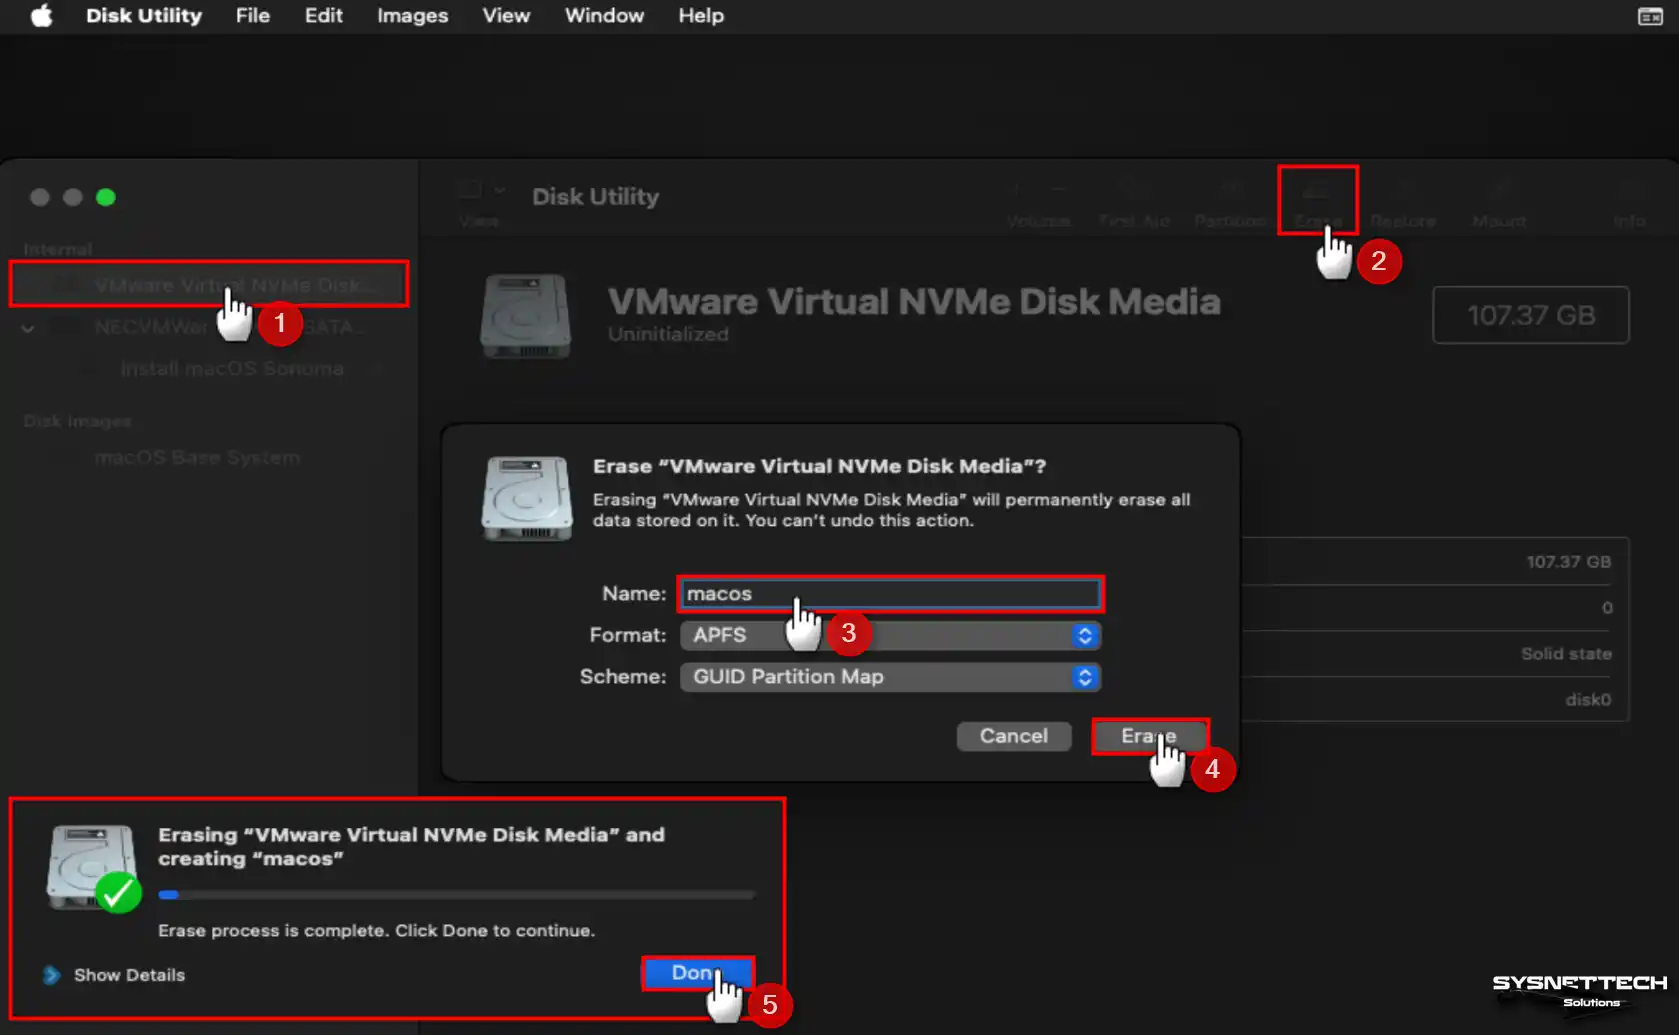 Formatting VMware Virtual NVMe Disk Media